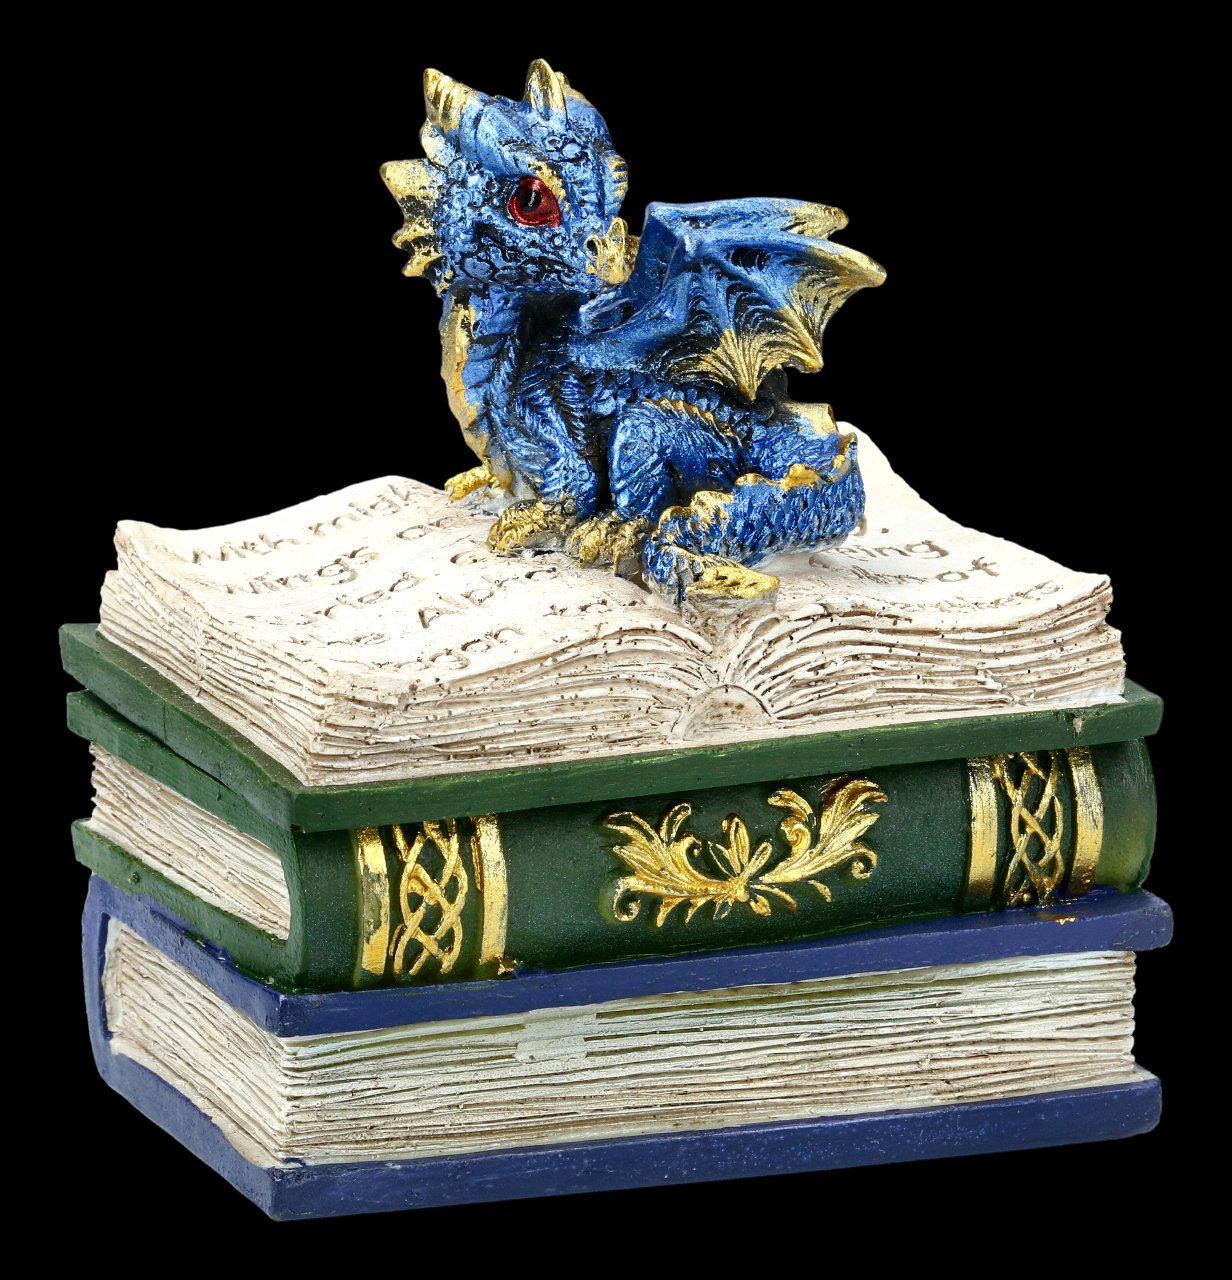 Dragon Box - Dragonling Diaries - blue